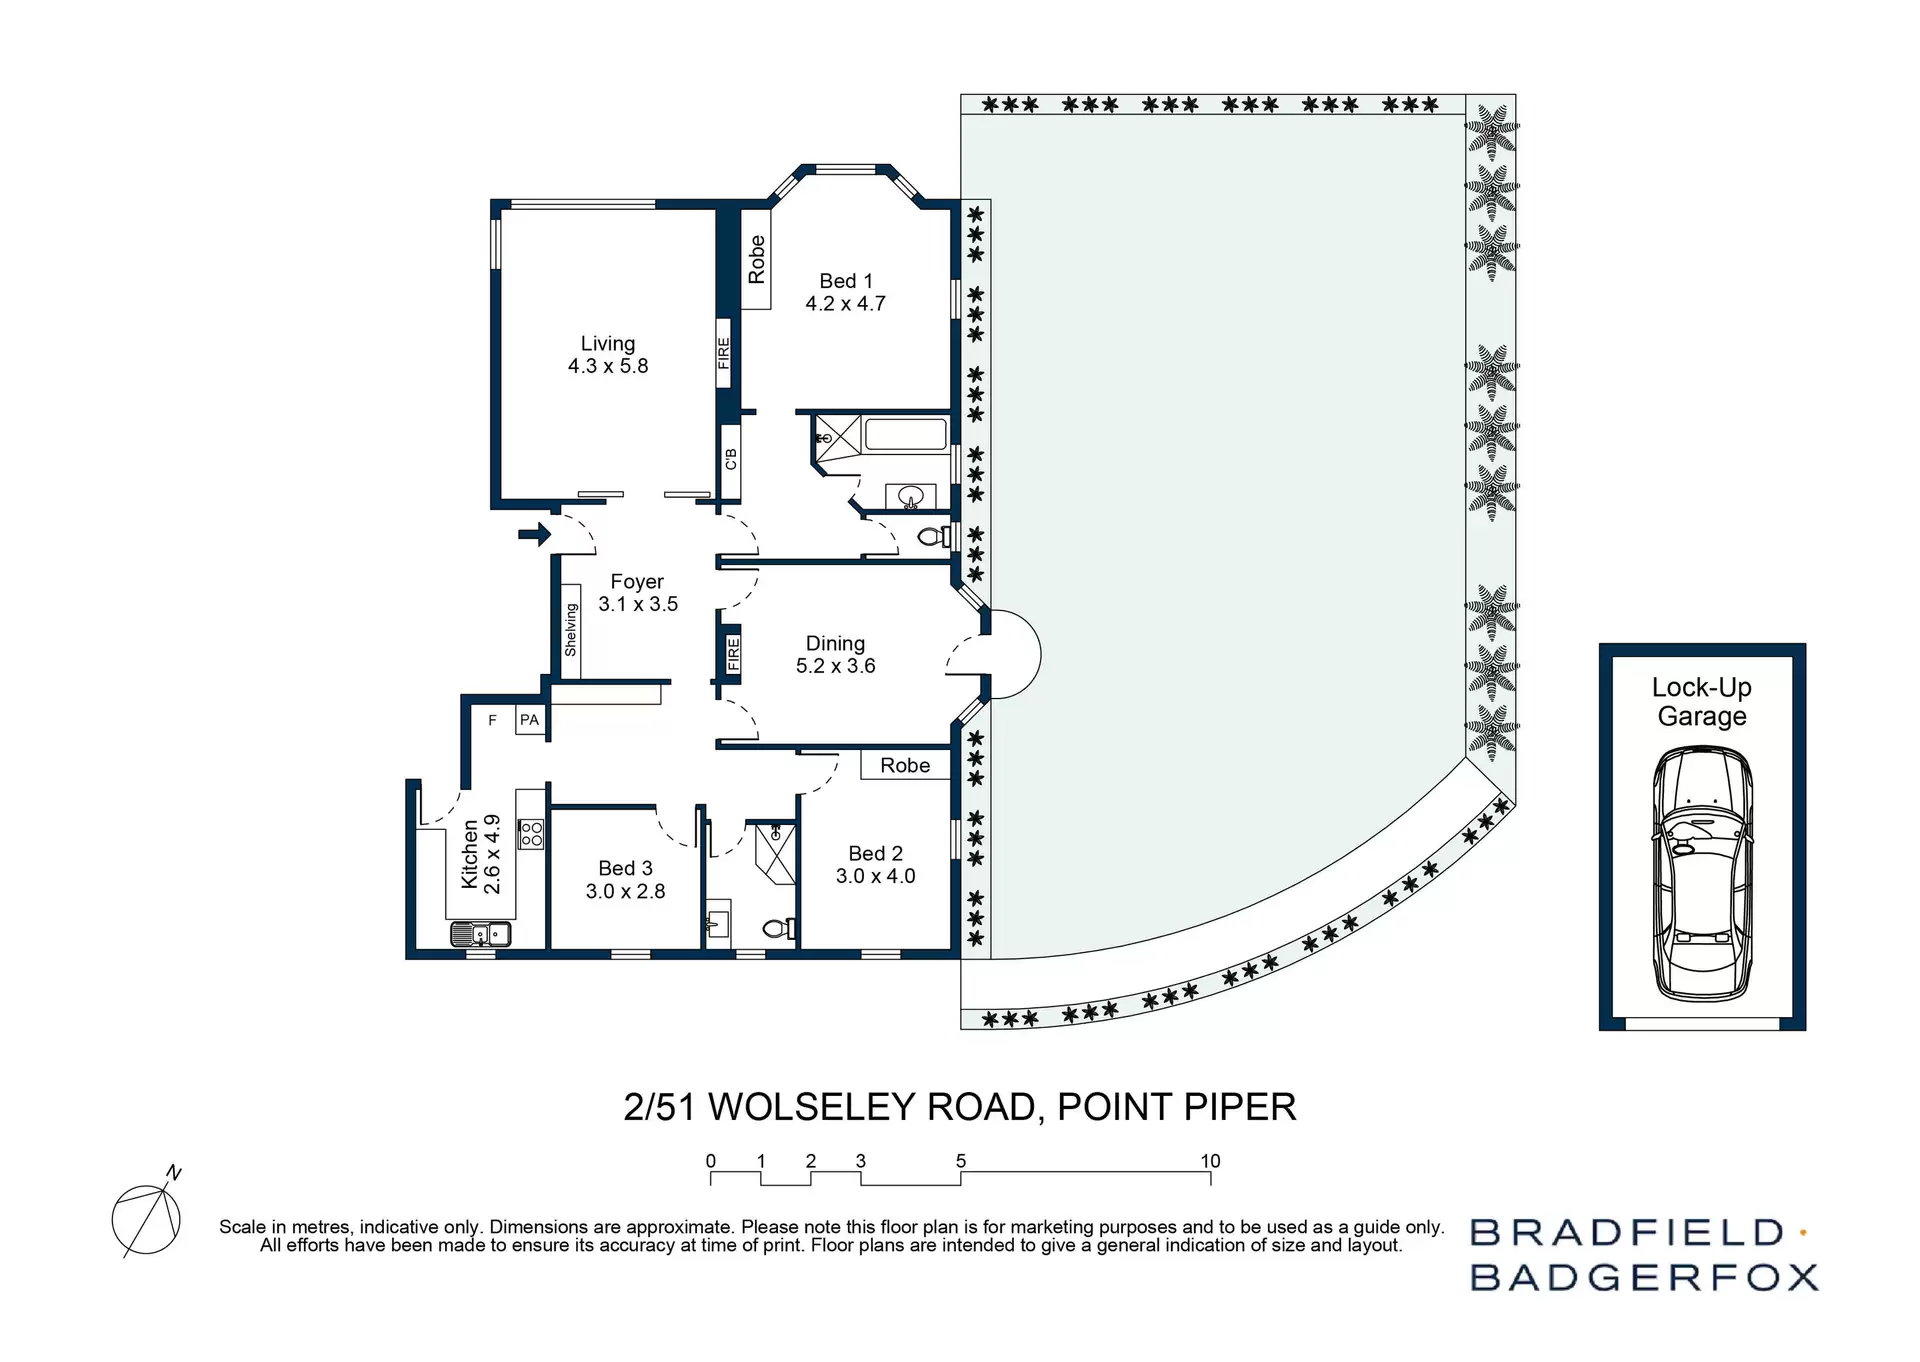 2/51 Wolseley Road, Point Piper For Sale by Bradfield Badgerfox - image 1